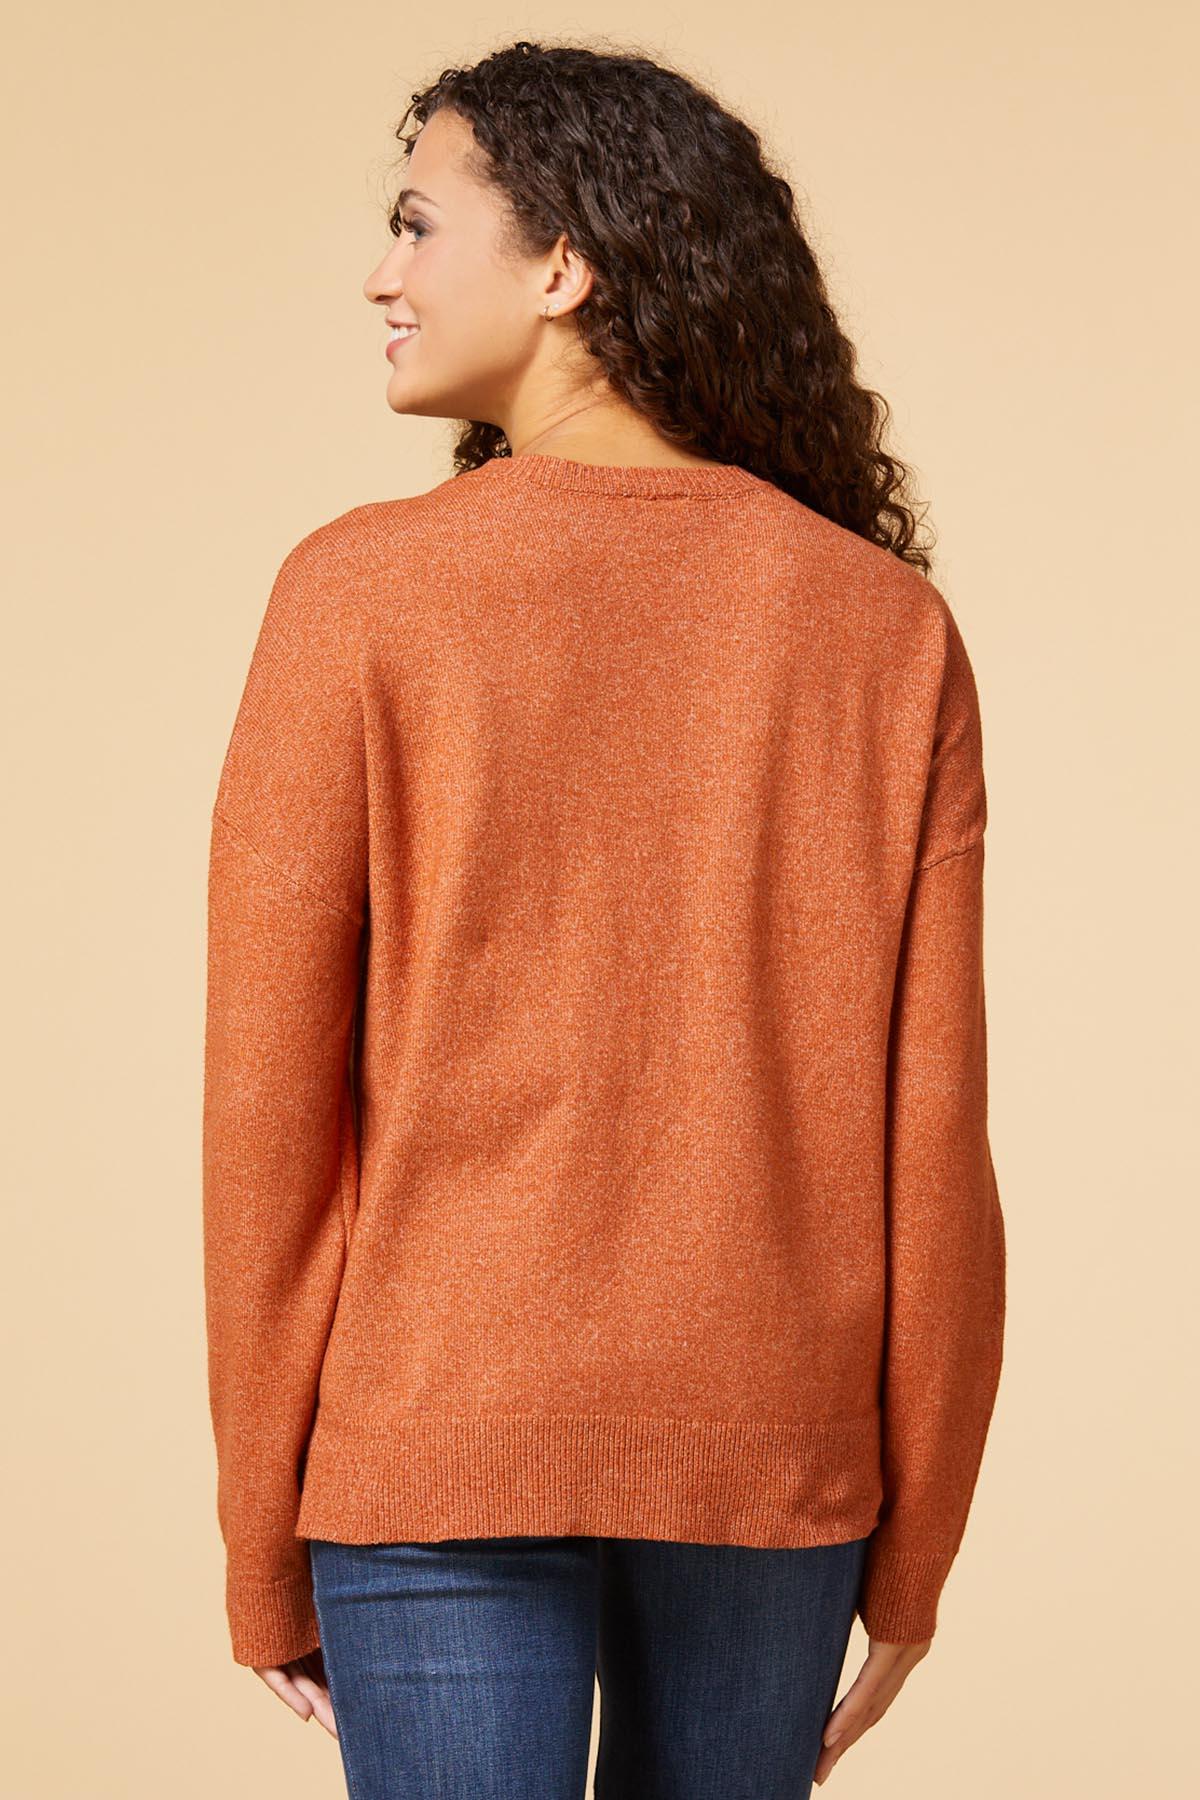 versona-happy-fall-y-all-sweater